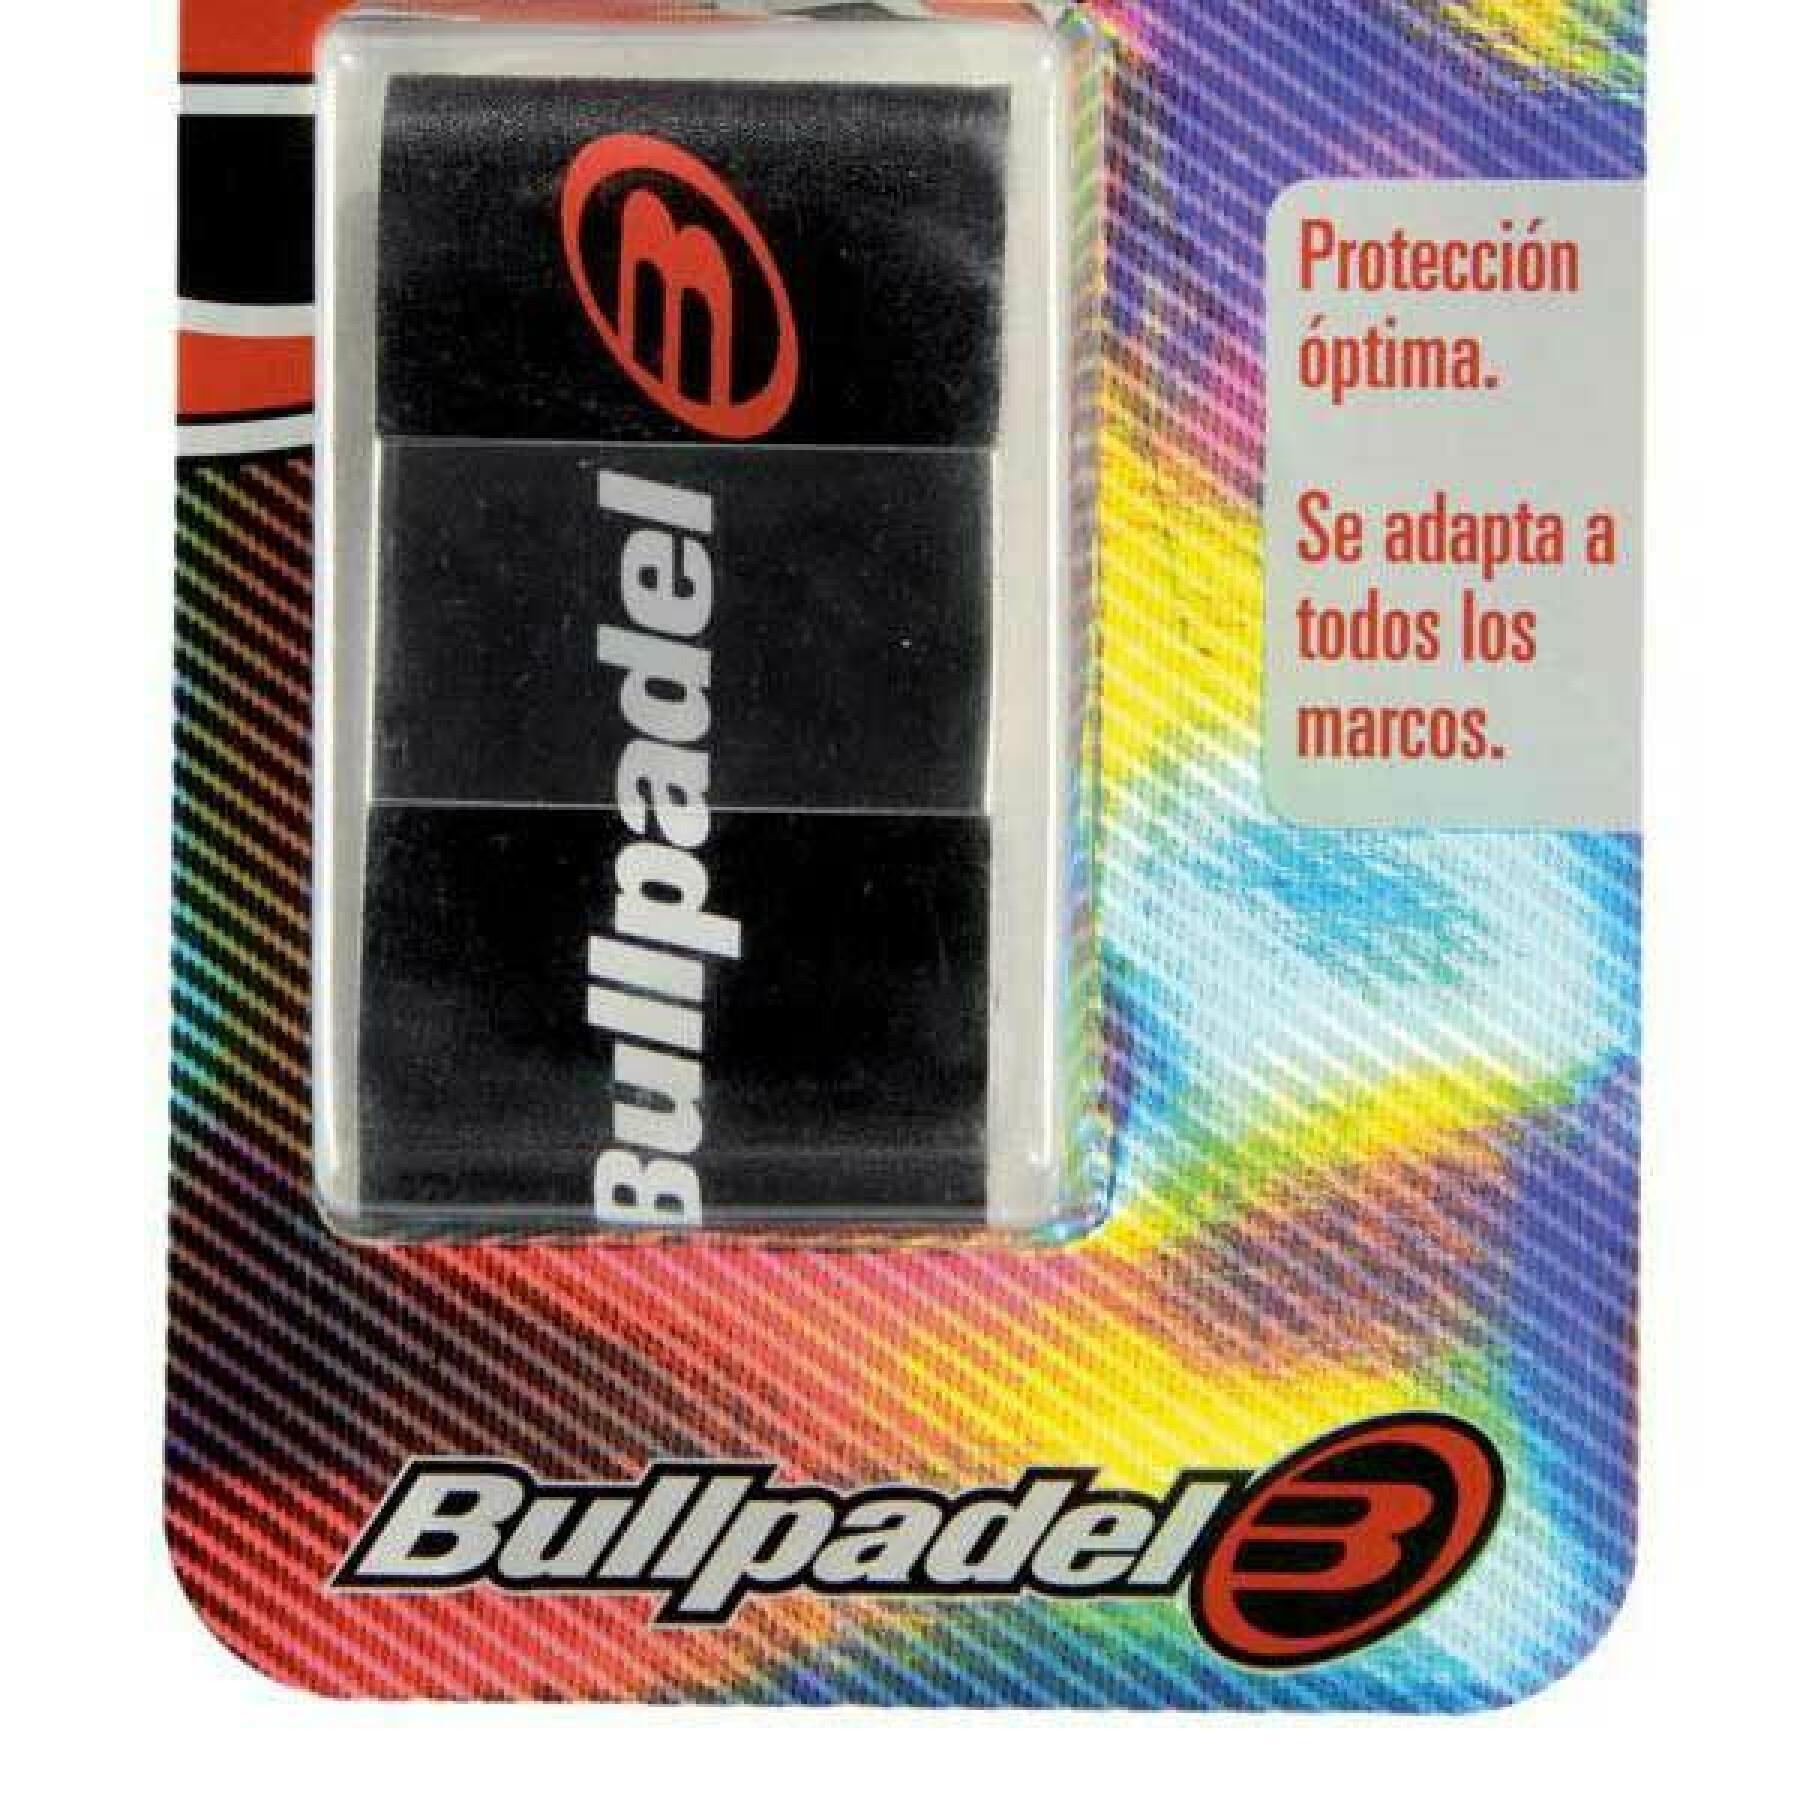 Grip protection box BullPadel